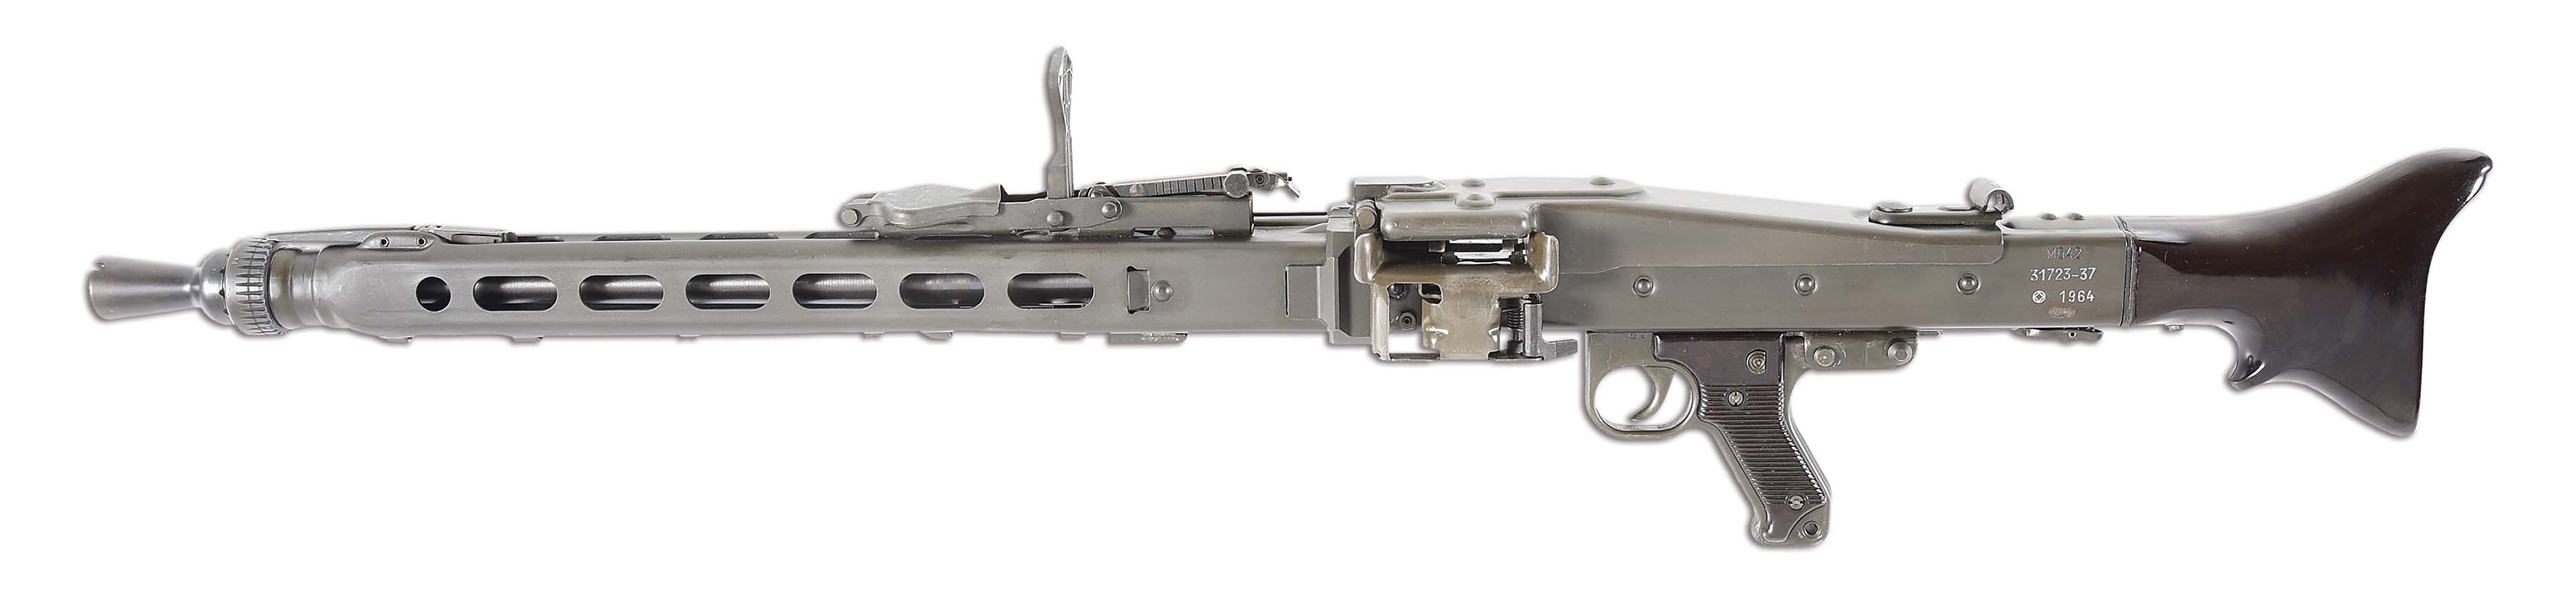 (N) ORIGINAL RHEINMETTAL MANUFACTURED FULLY TRANSFERABLE GERMAN MG 42/59 MACHINE GUN (FULLY TRANSFERABLE).